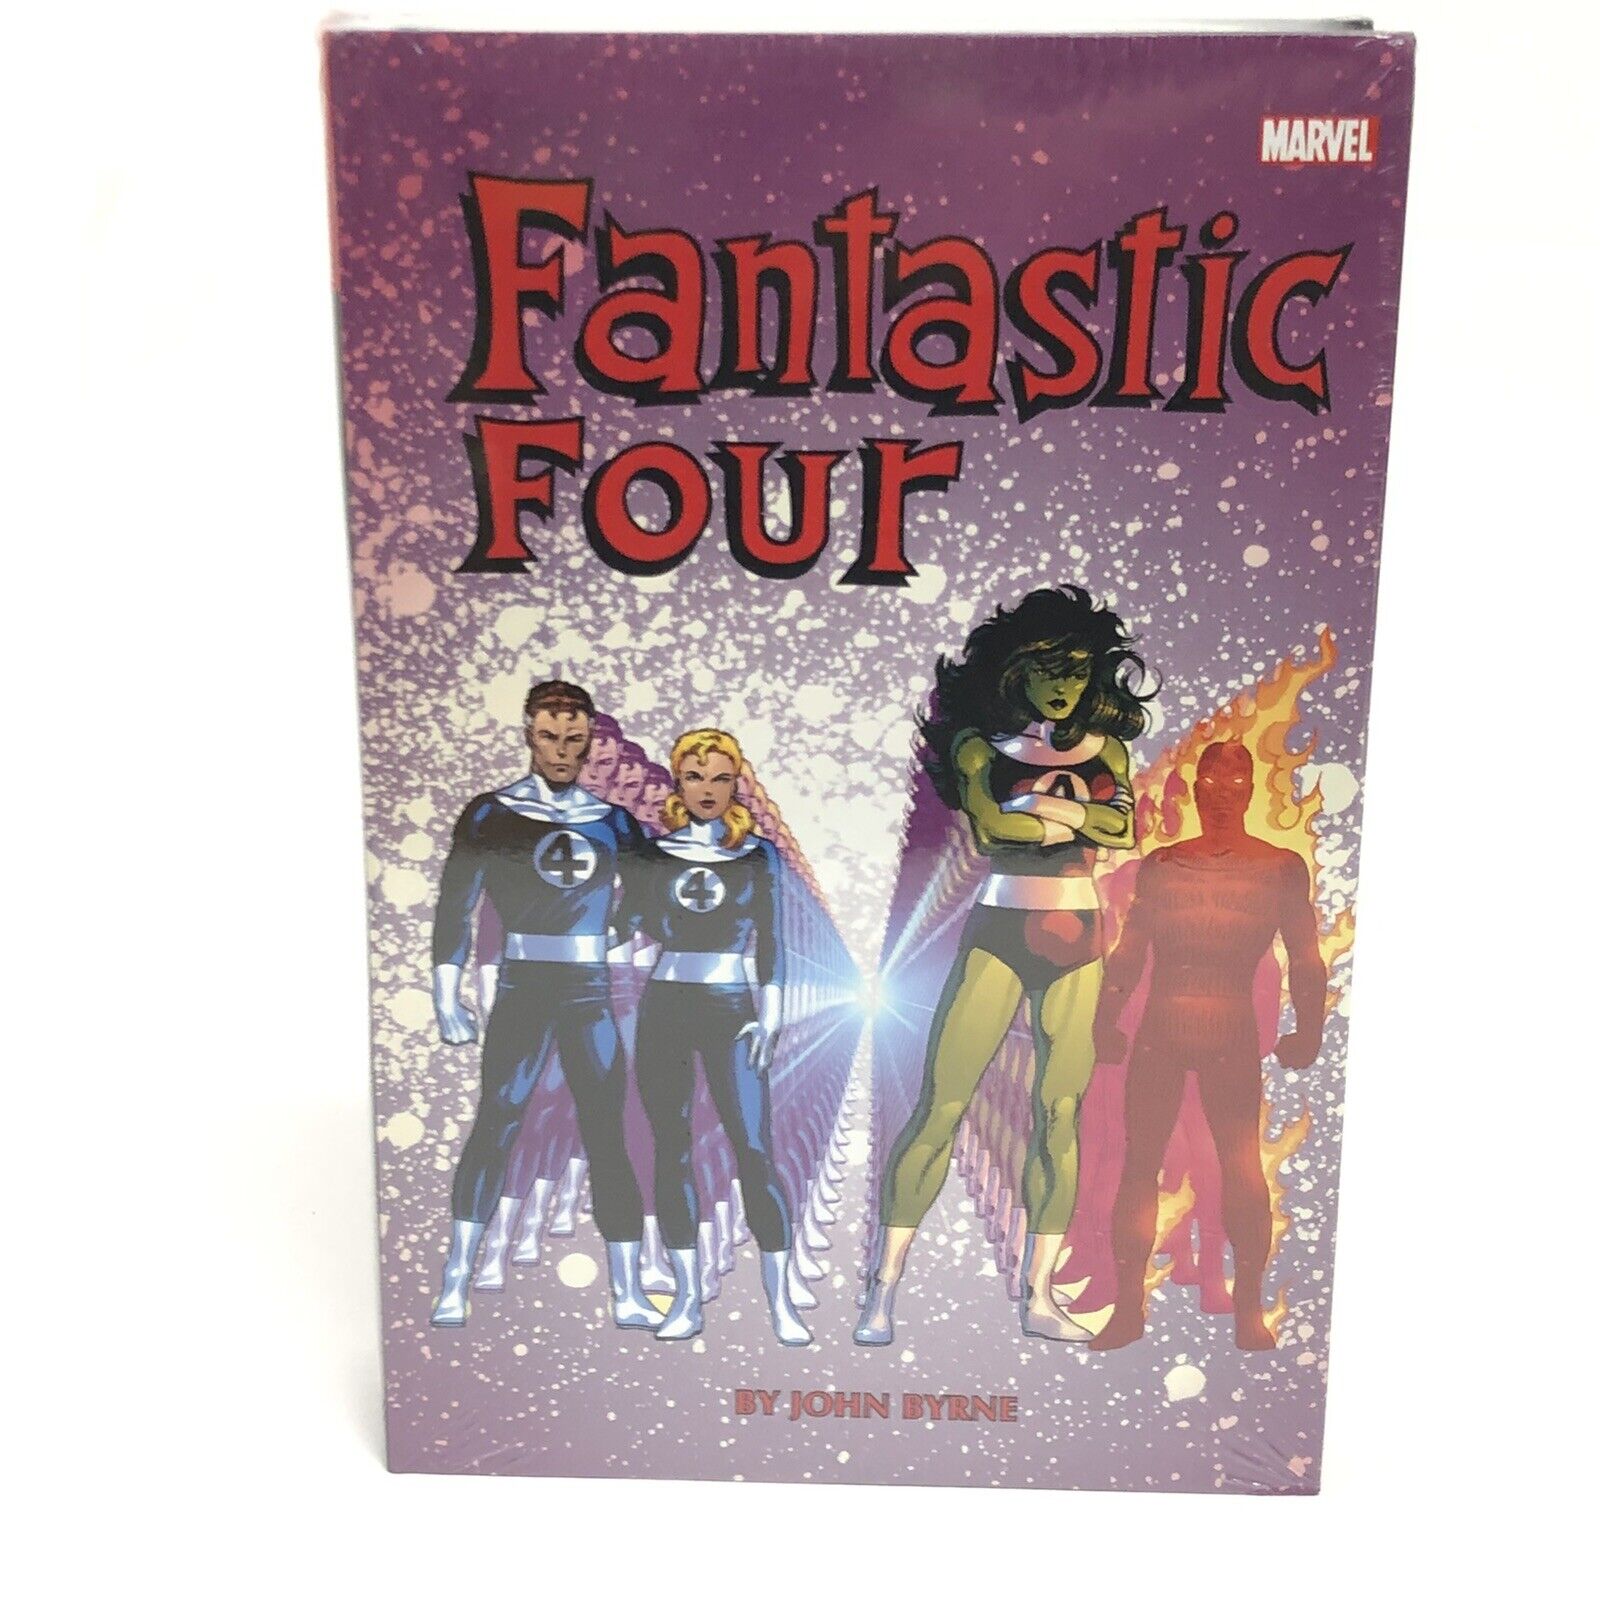 Fantastic Four by John Byrne Omnibus Vol 2 New Marvel Comics HC Hardcover Sealed